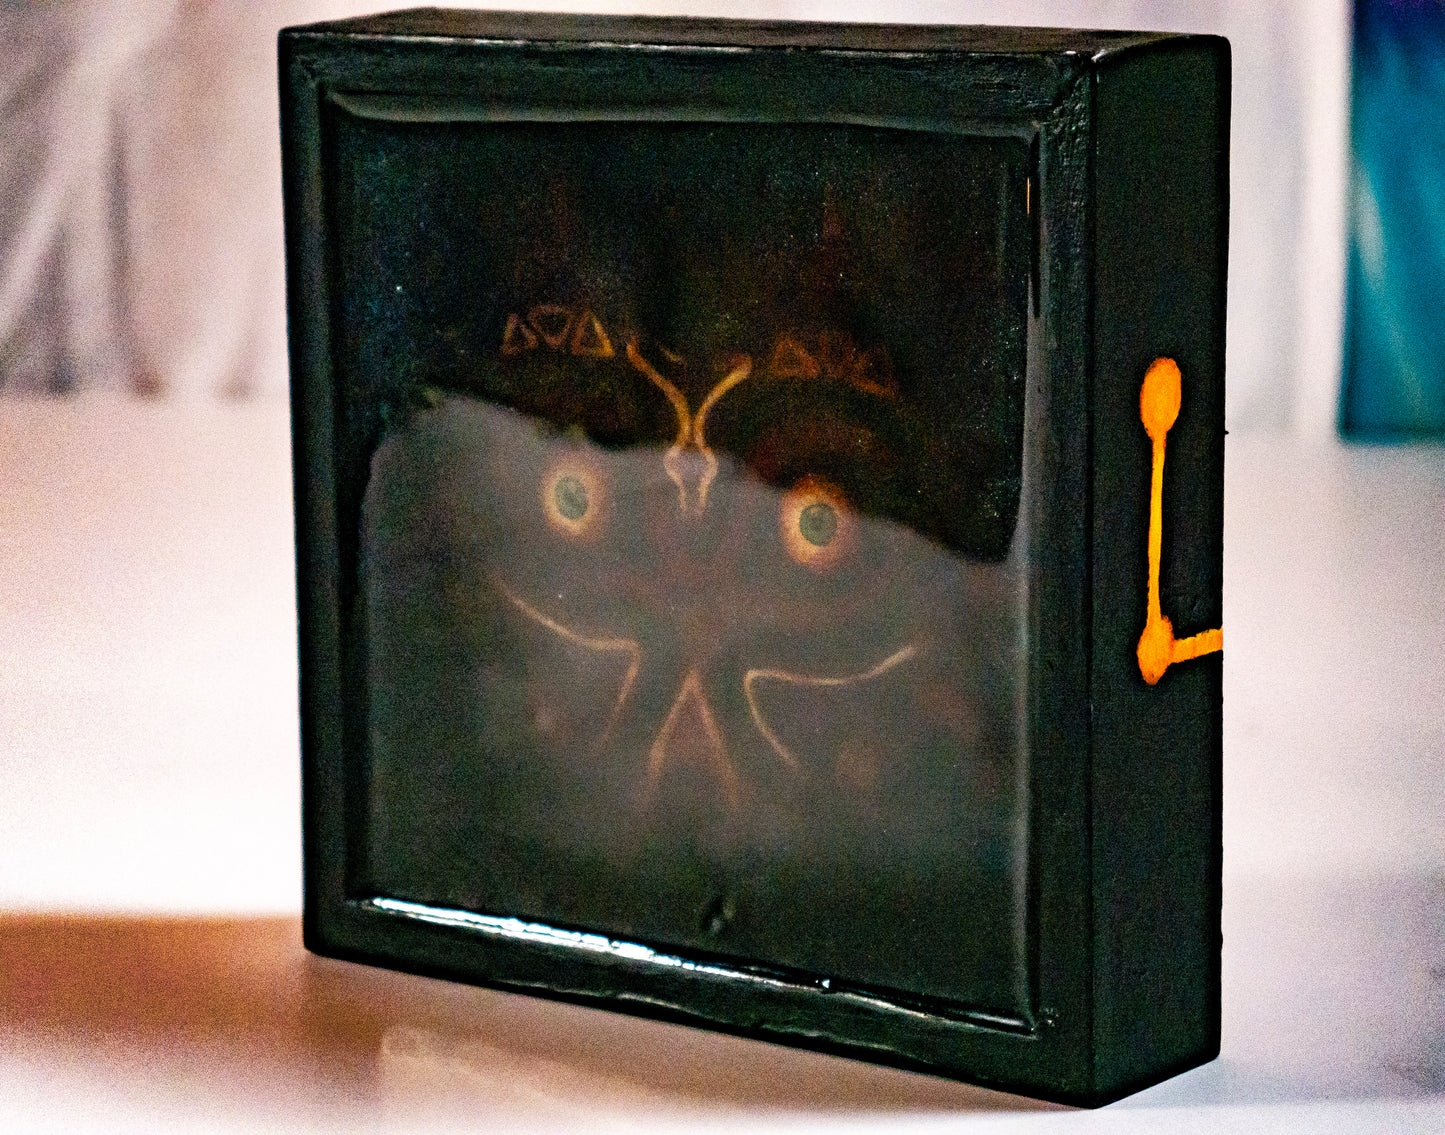 The Majora's Mask Sealed Away Original Artwork